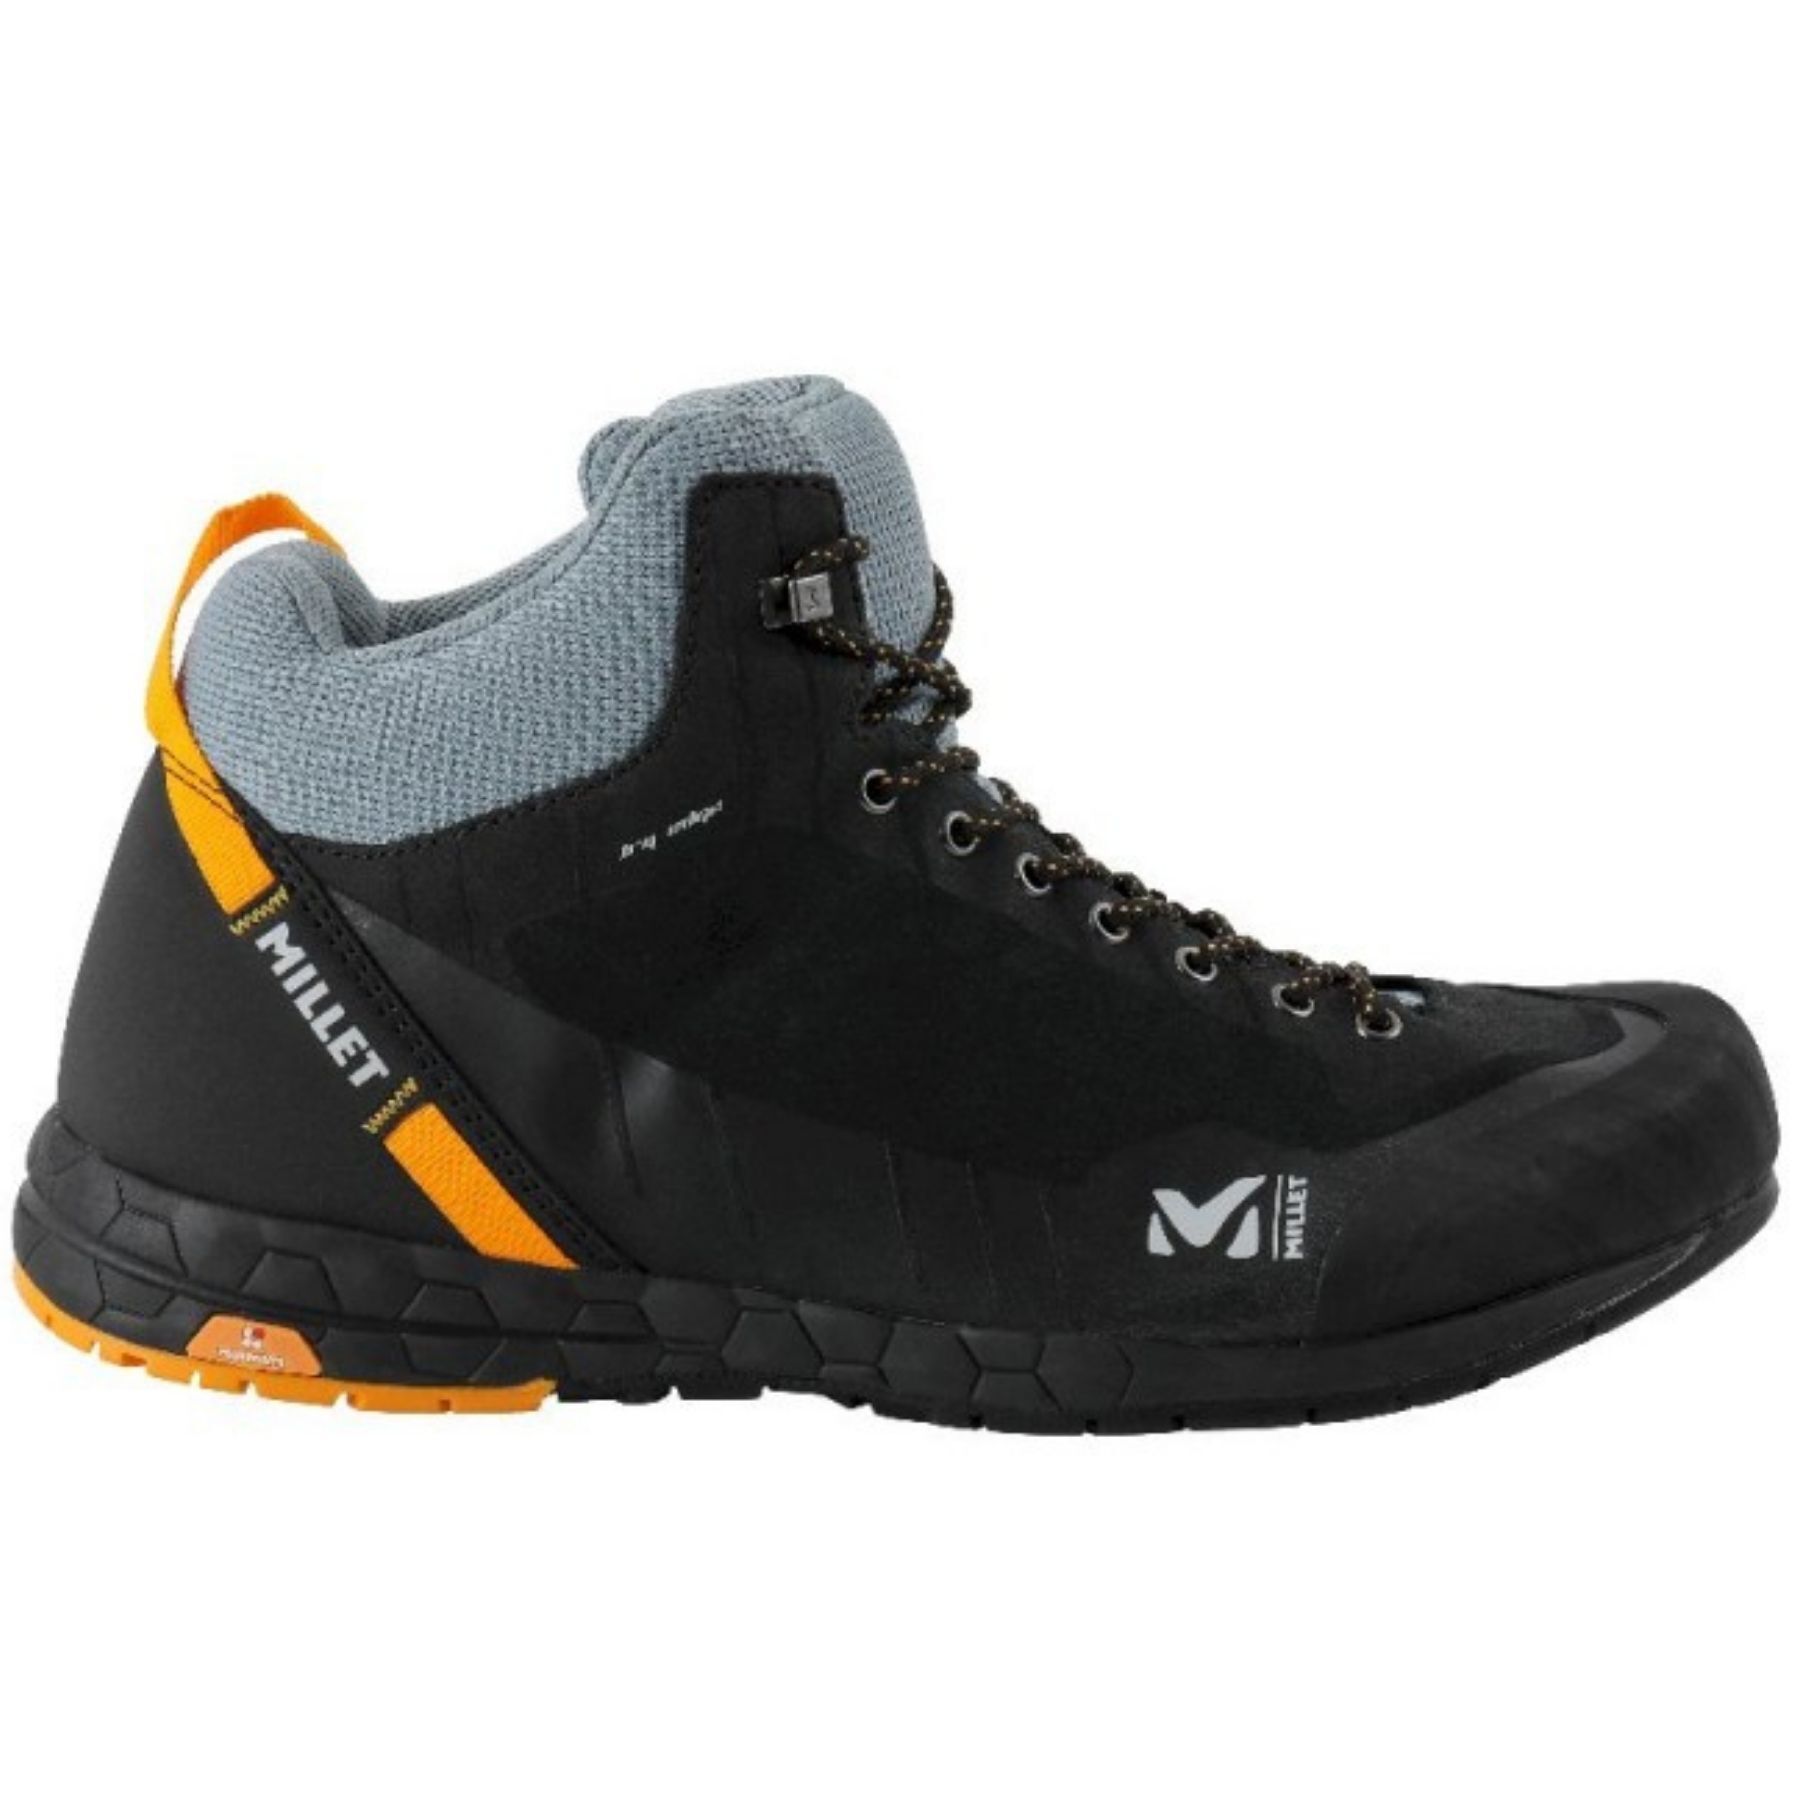 Millet Amuri Leather Mid - Approach shoes - Men's